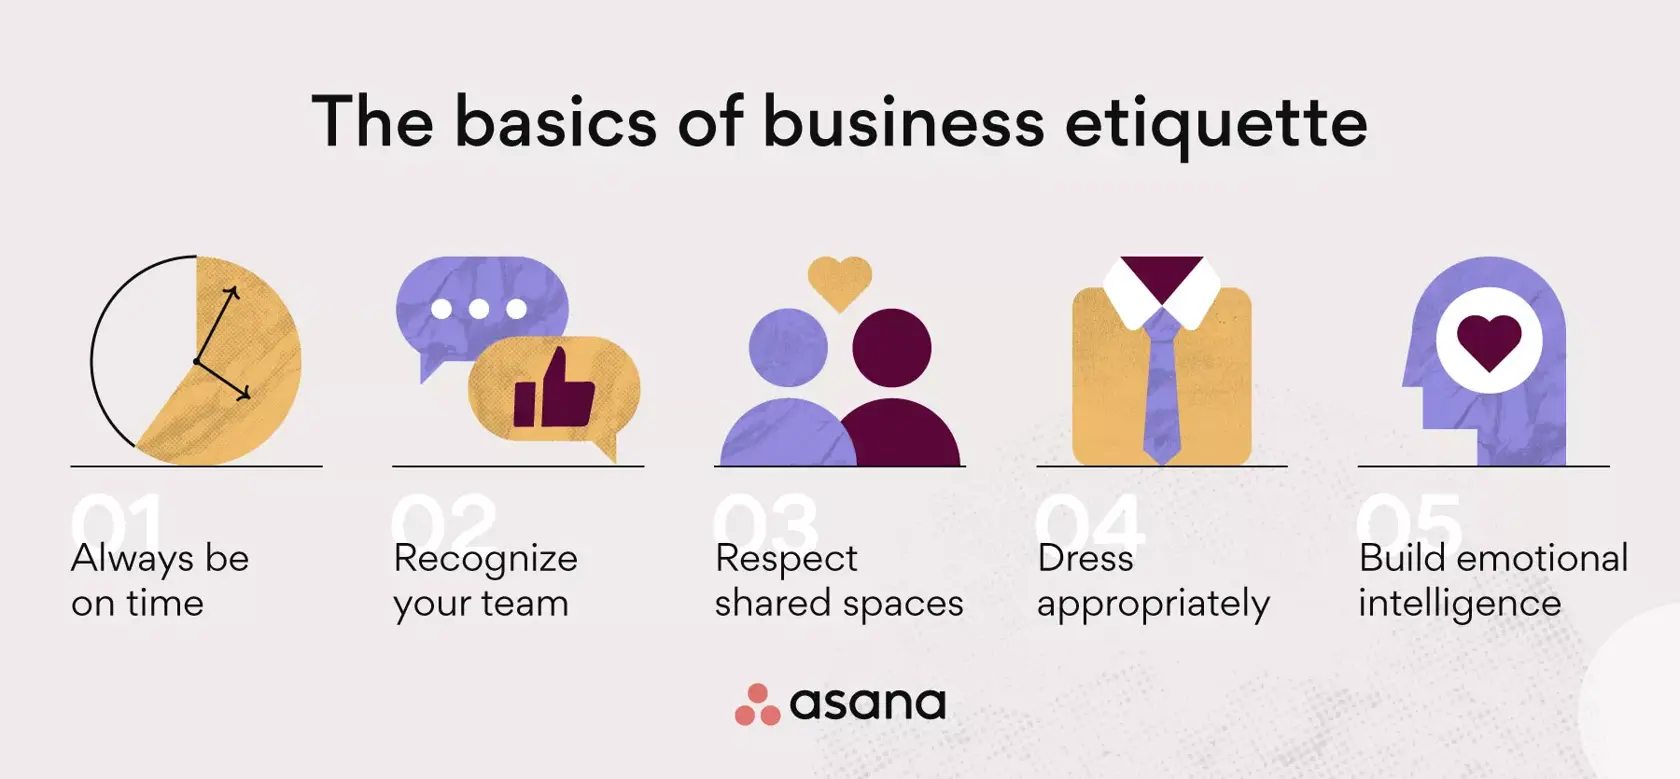 The basics of business etiquette